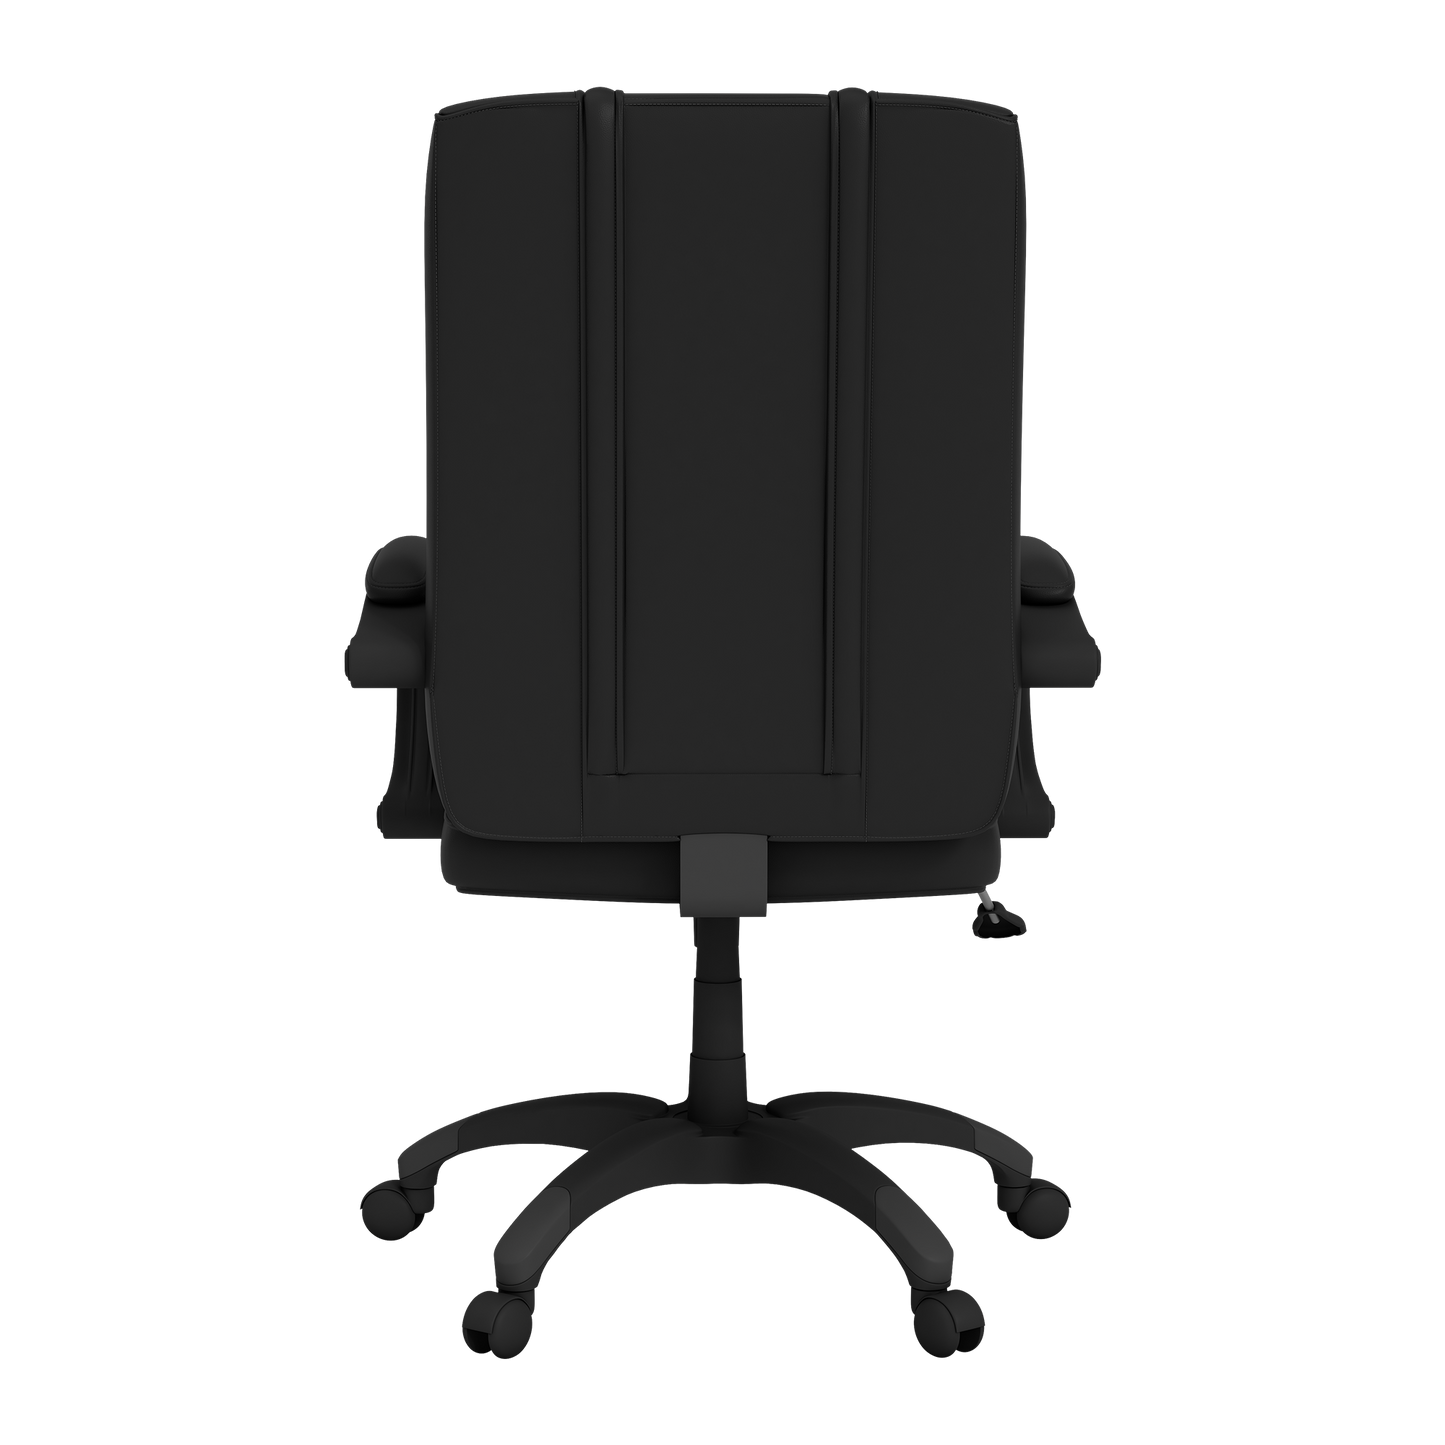 Office Chair 1000 with Toronto Raptors Alternate 2019 Champions Logo